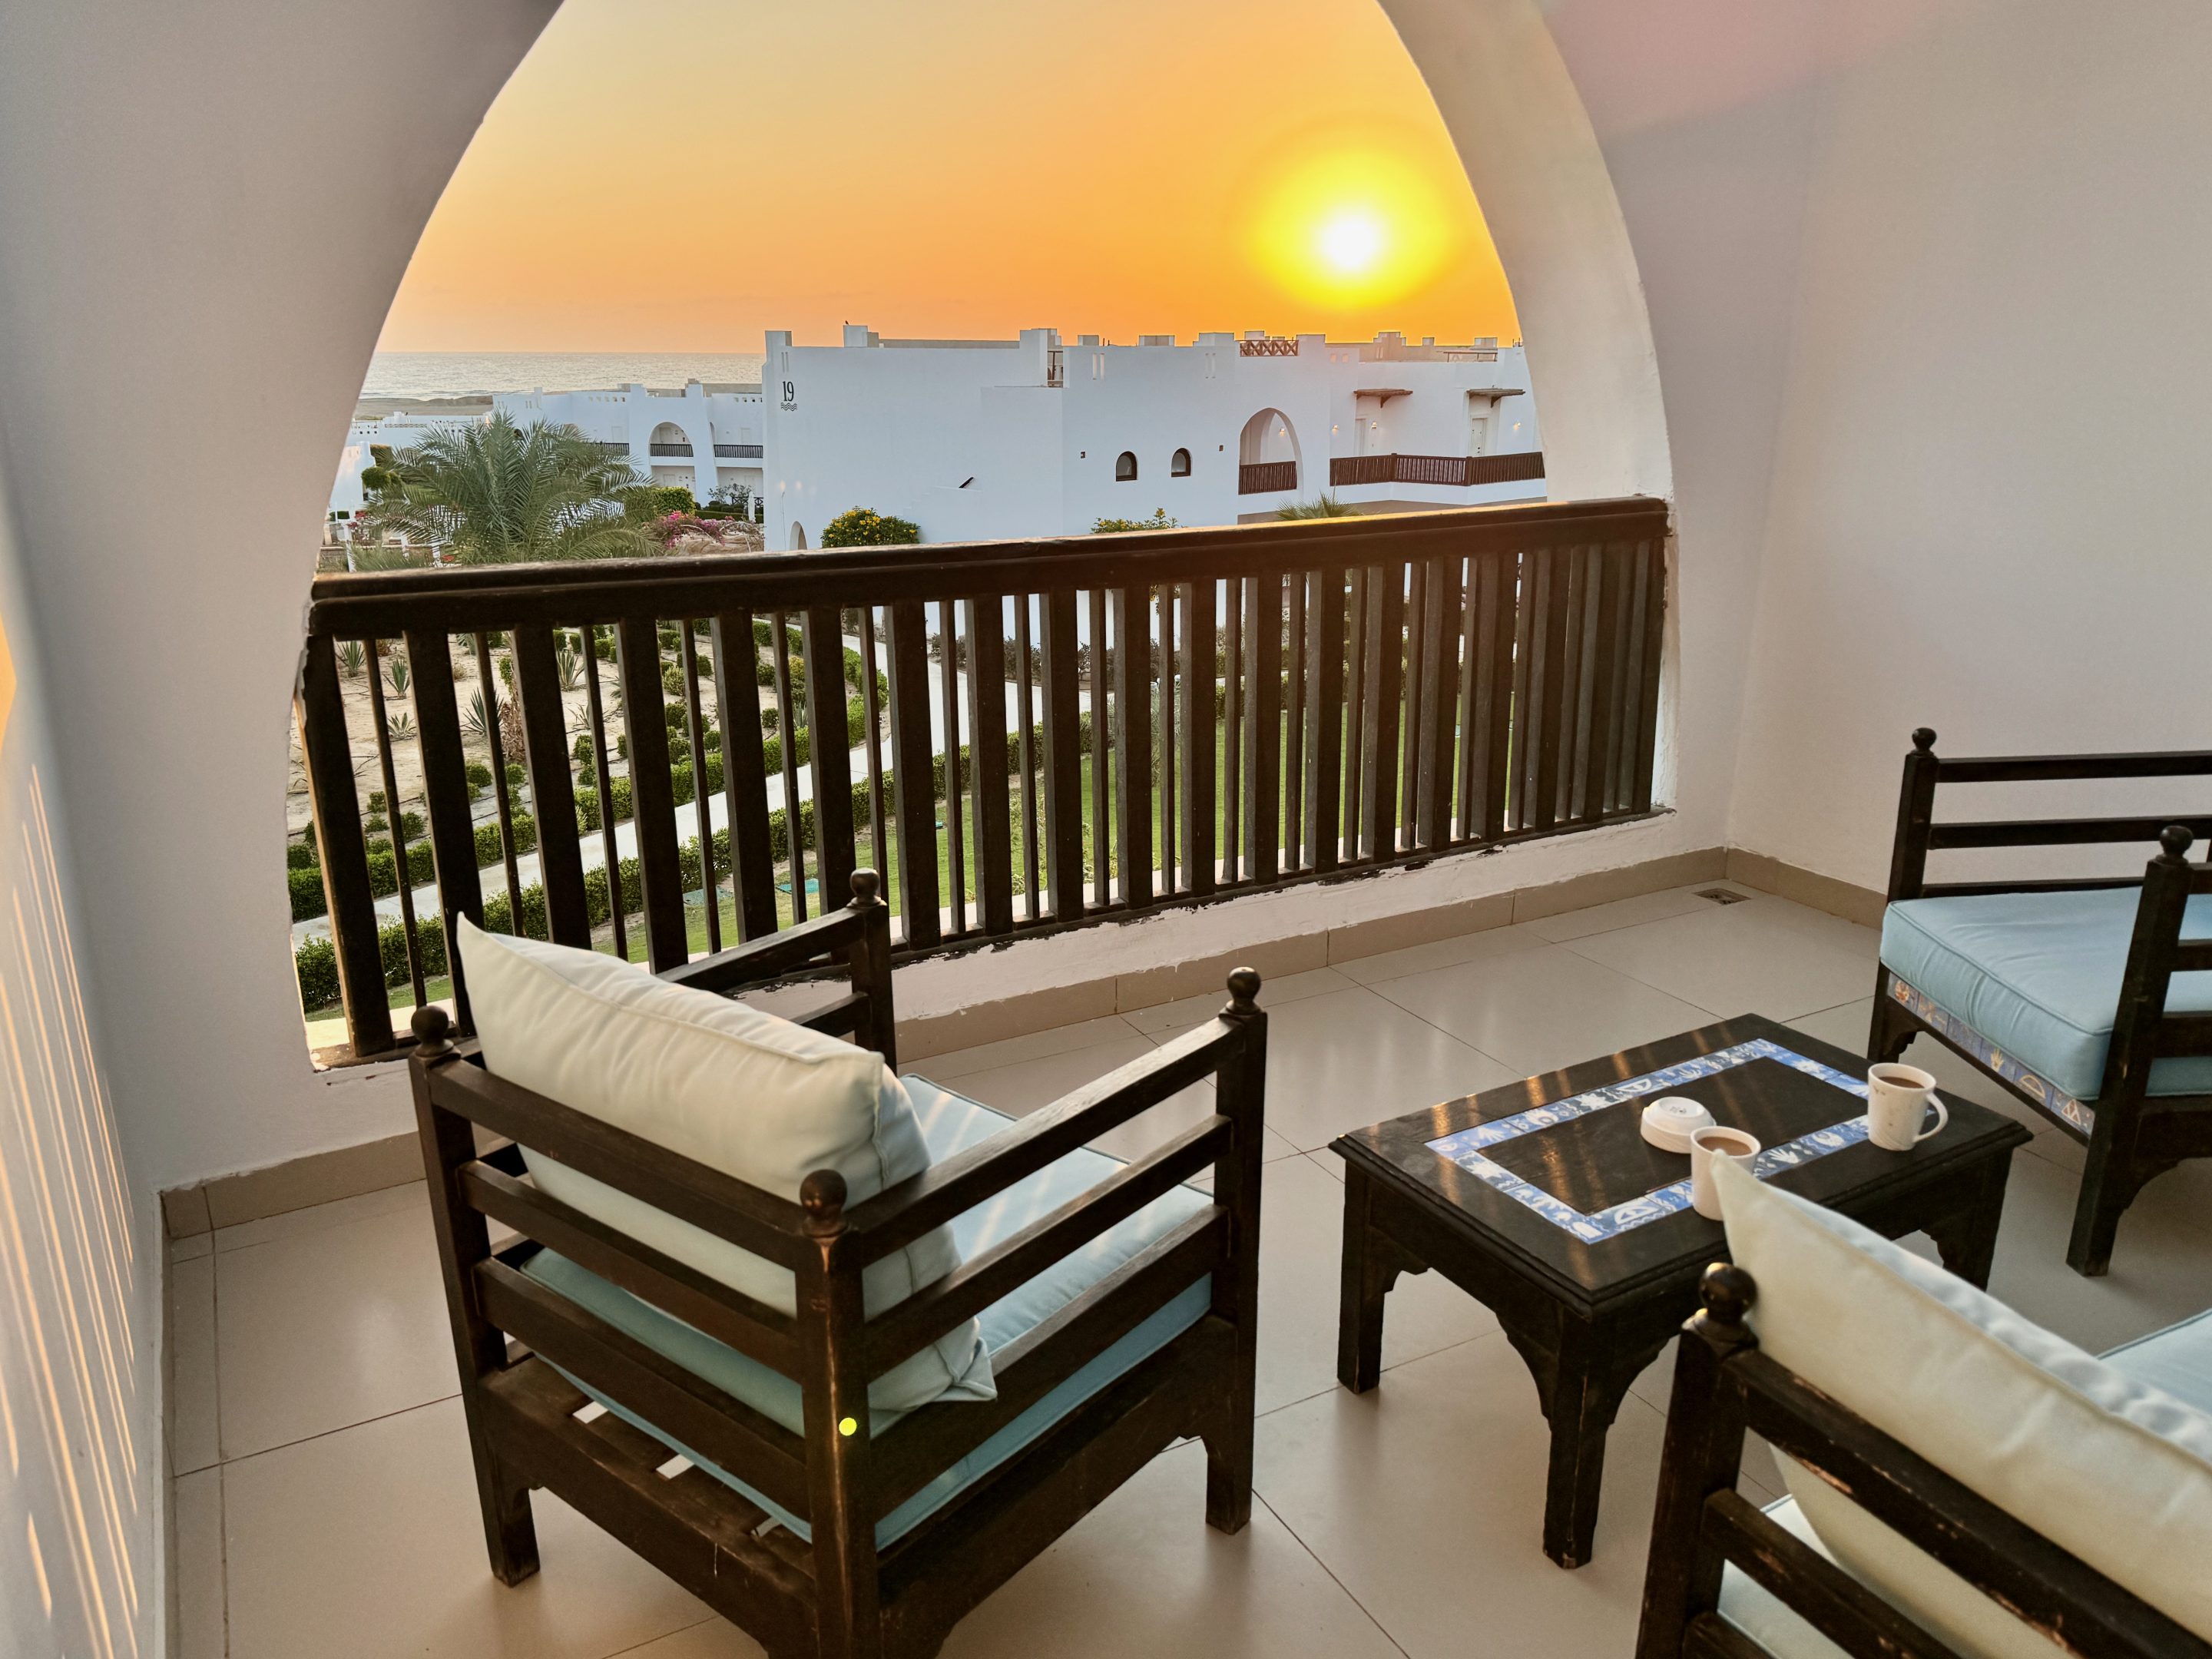 Sunrise on the balcony with a coffee – the perfect start to the day at the Hilton Marsa Alam. Photo: Sascha Tegtmeyer Hilton Marsa Alam Nubian Resort Experiences Reviews